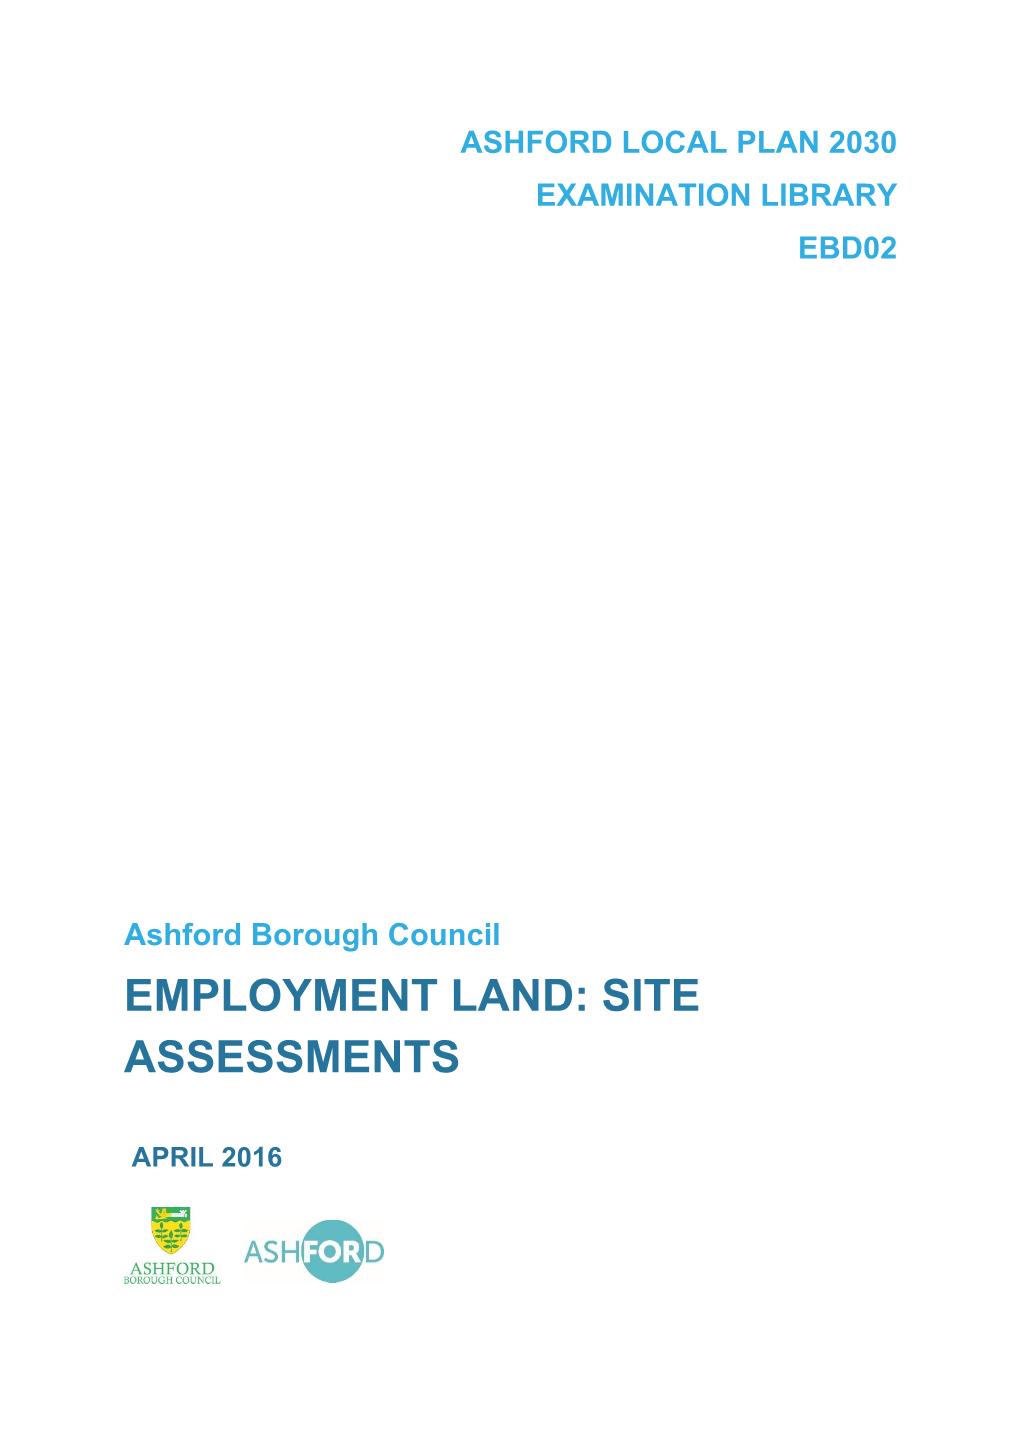 Employment Land: Site Assessments